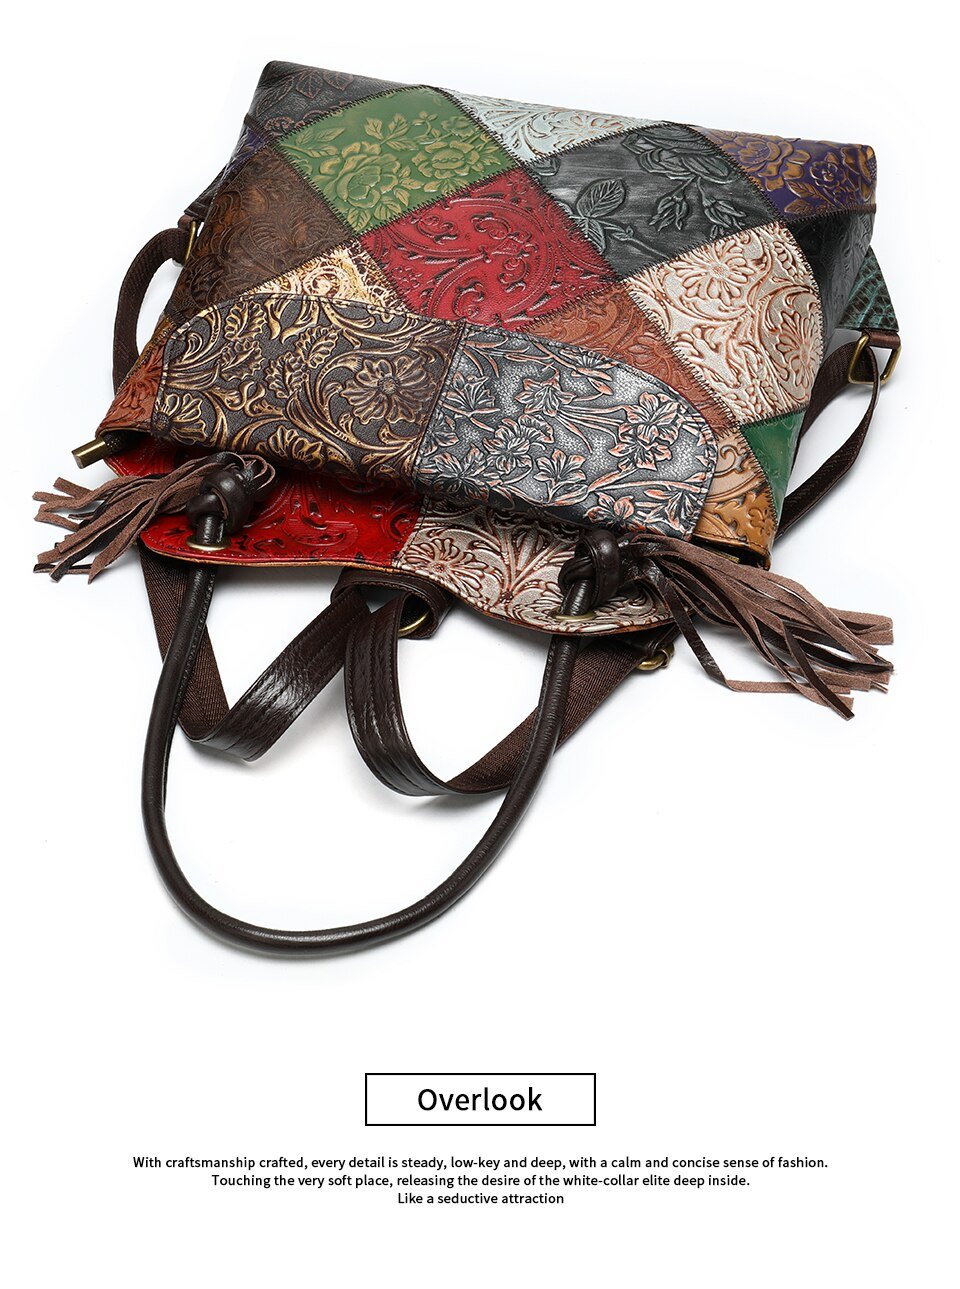 Vintage lady's sling bag or backpack with floral embossed patterns on leather patchwork